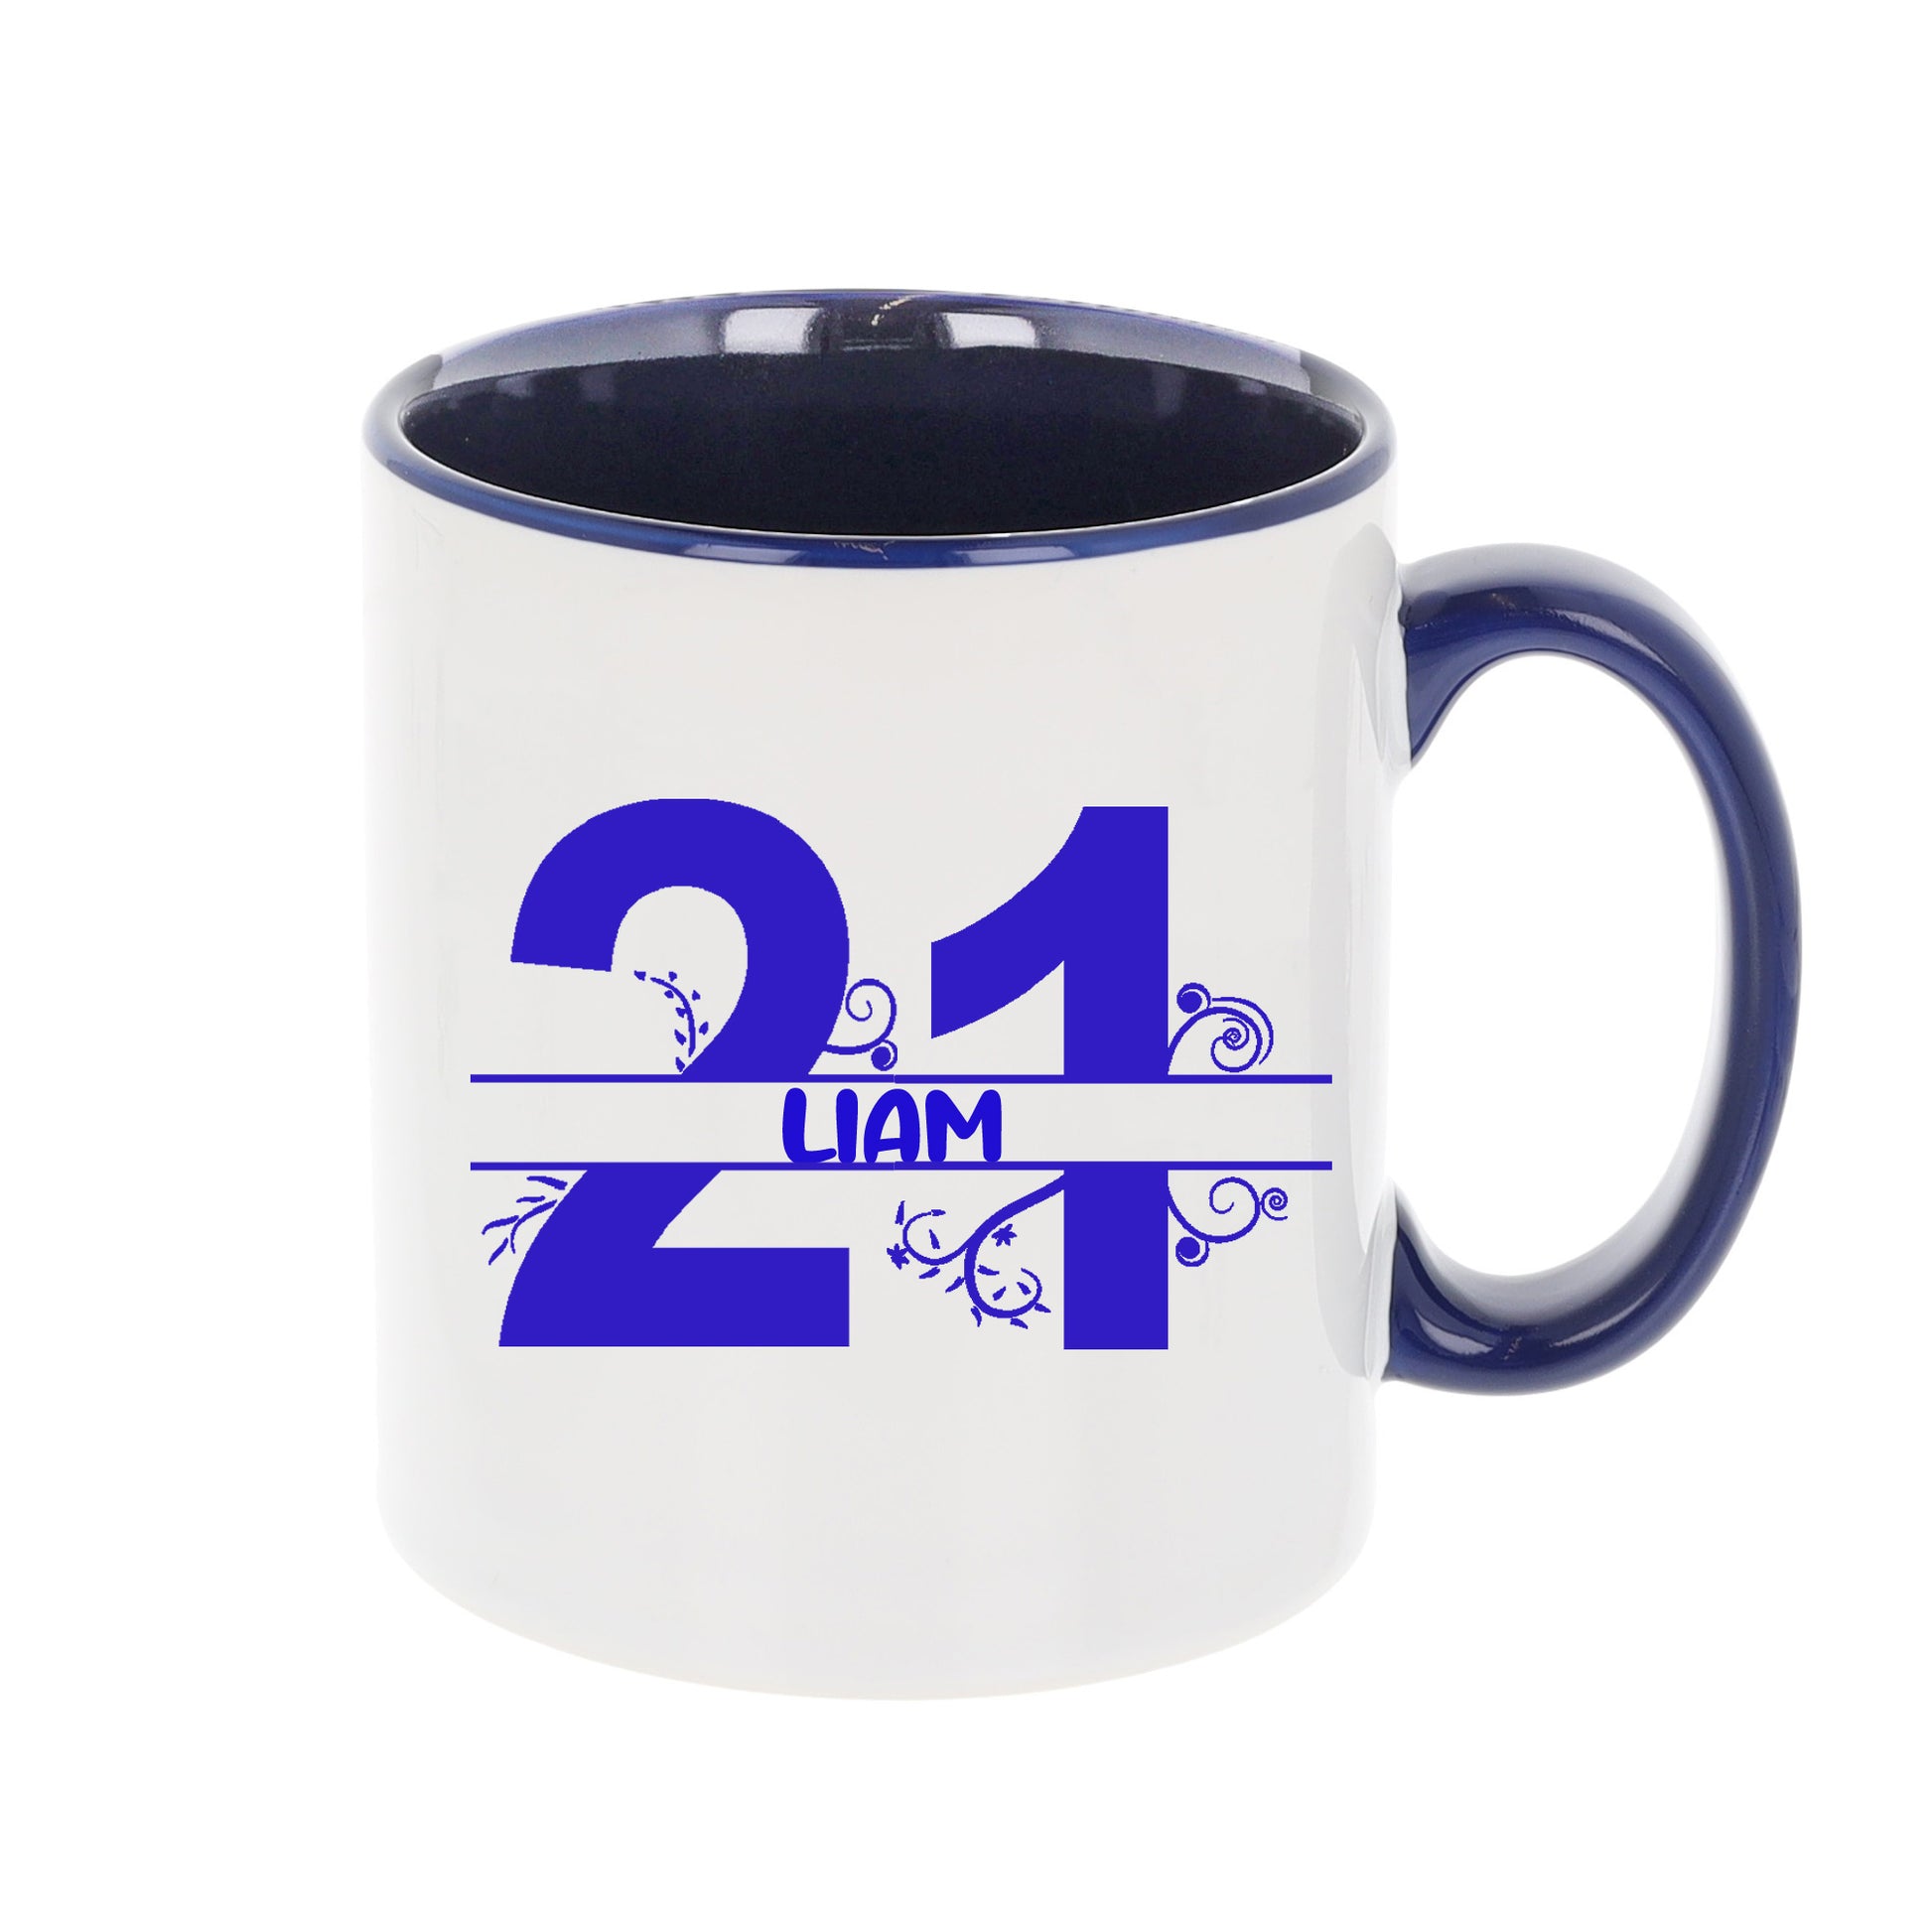 Personalised Filled 21st Birthday Mug  - Always Looking Good - Blue Mug Only  